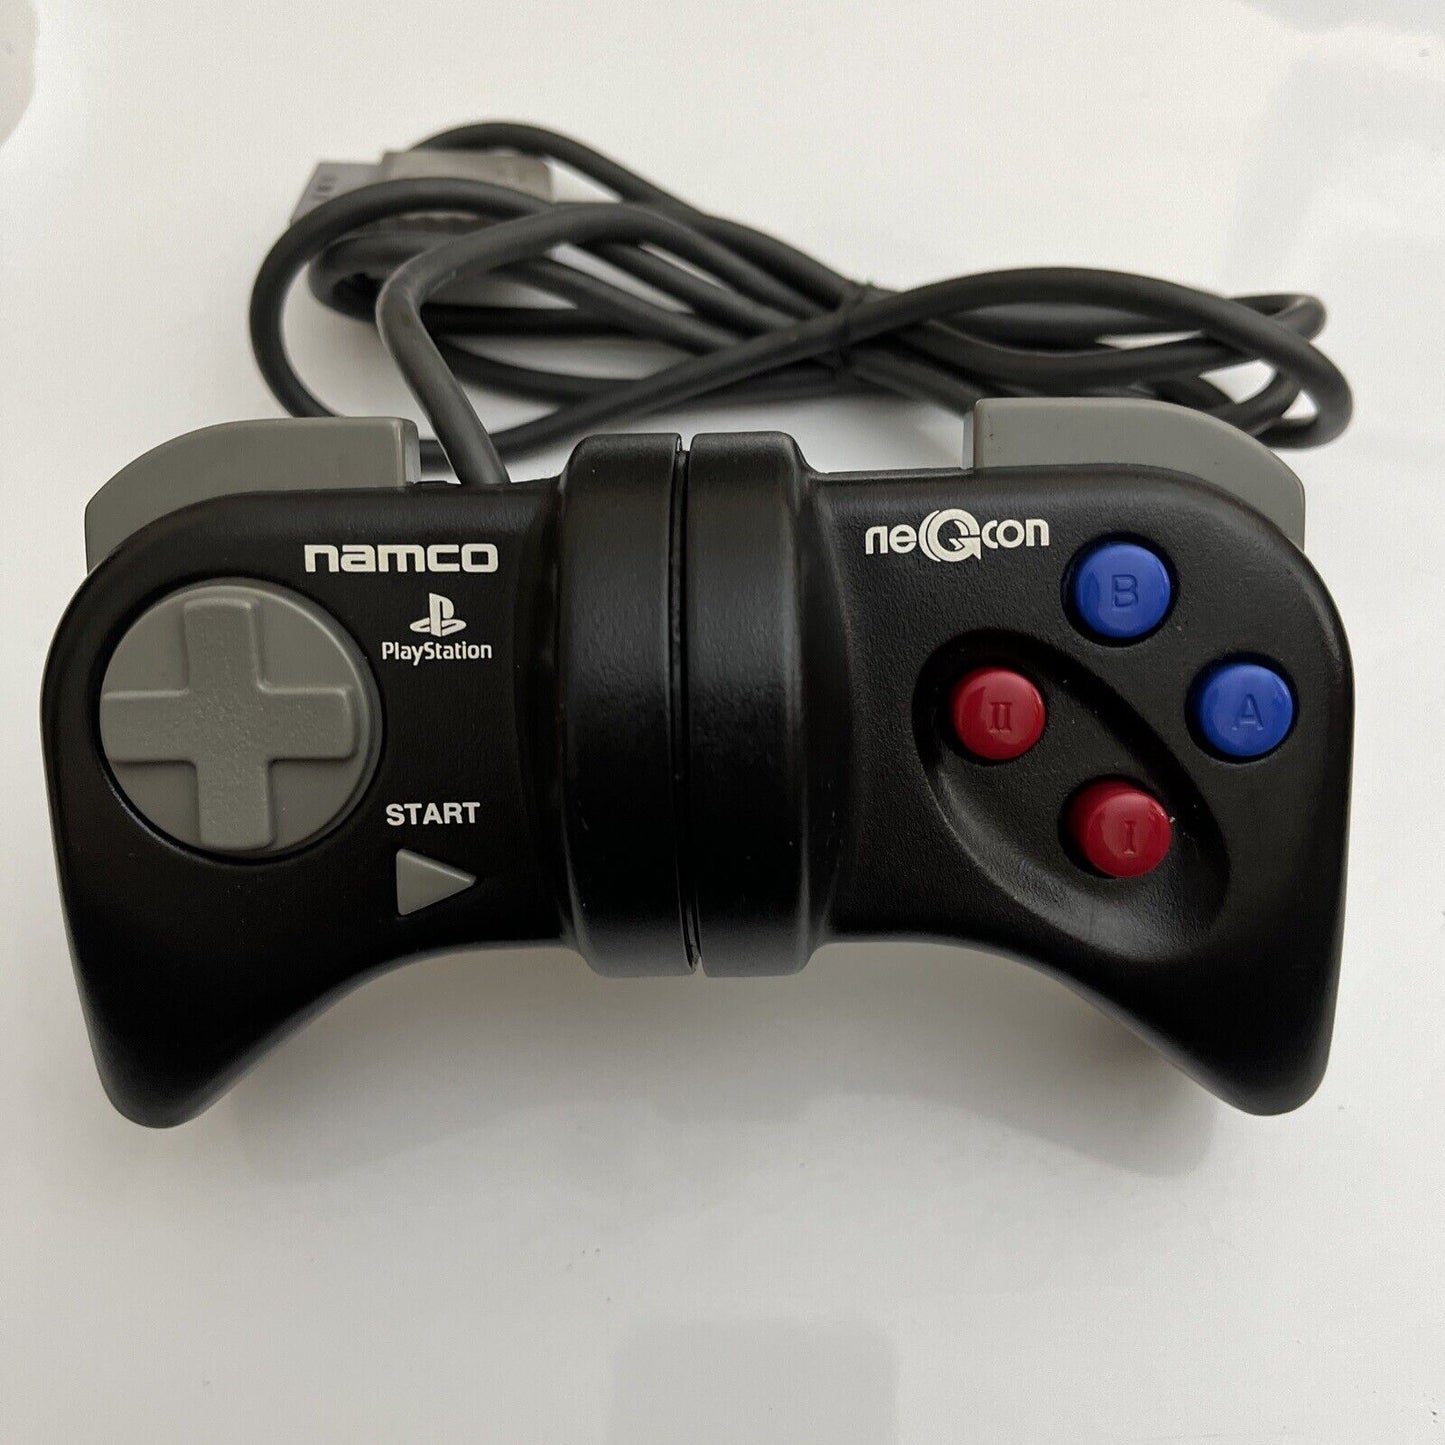 Namco Sony PlayStation Negcon Controller Black NPC-104